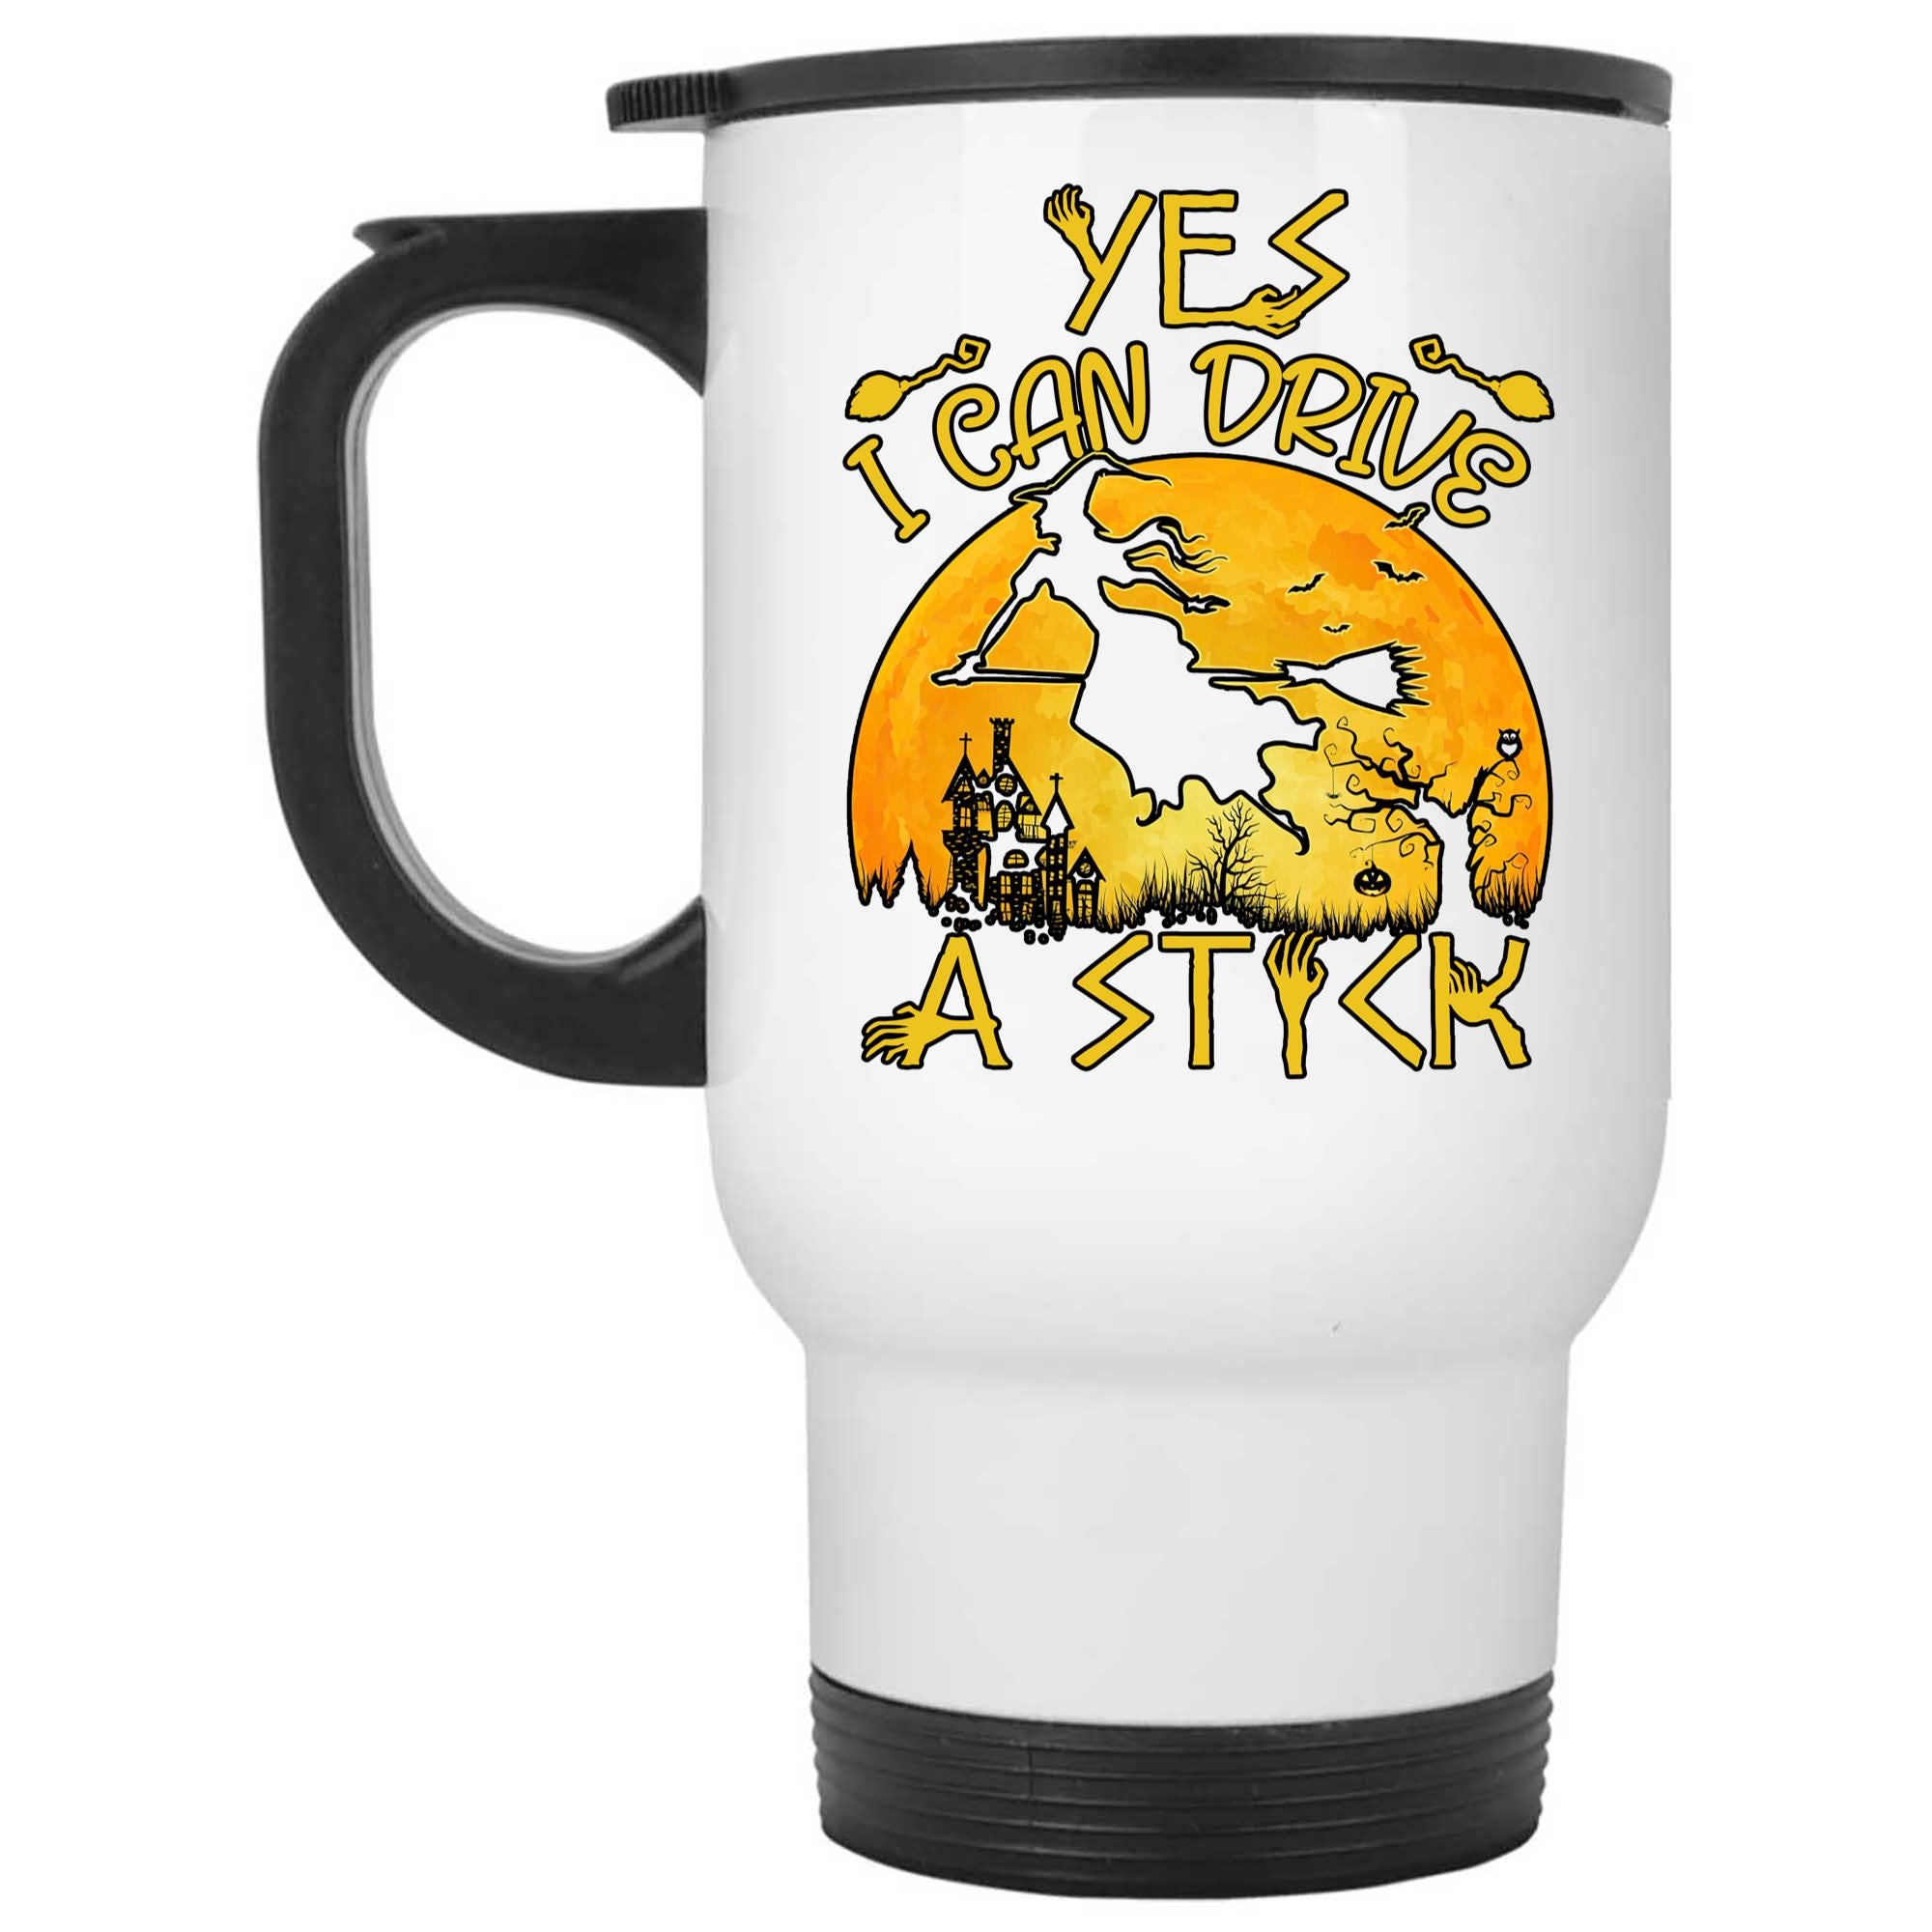 Skitongifts Coffee Mug Funny Ceramic Novelty Yes I Can Drive A Stick Witch Halloween duKhJCS